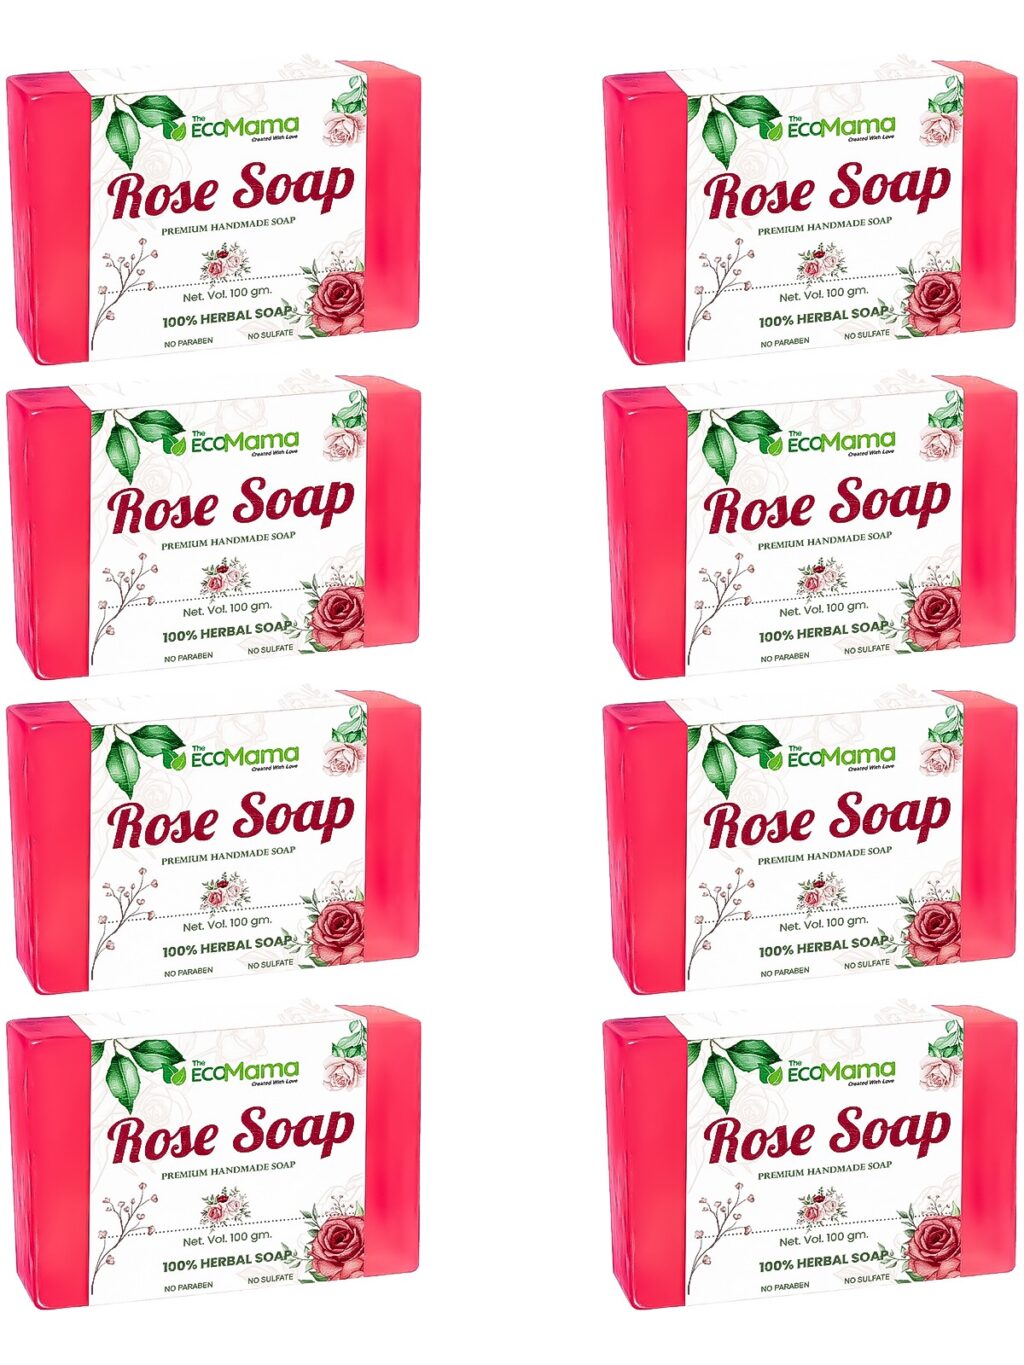 Rose Soap | Premium Handmade Soap